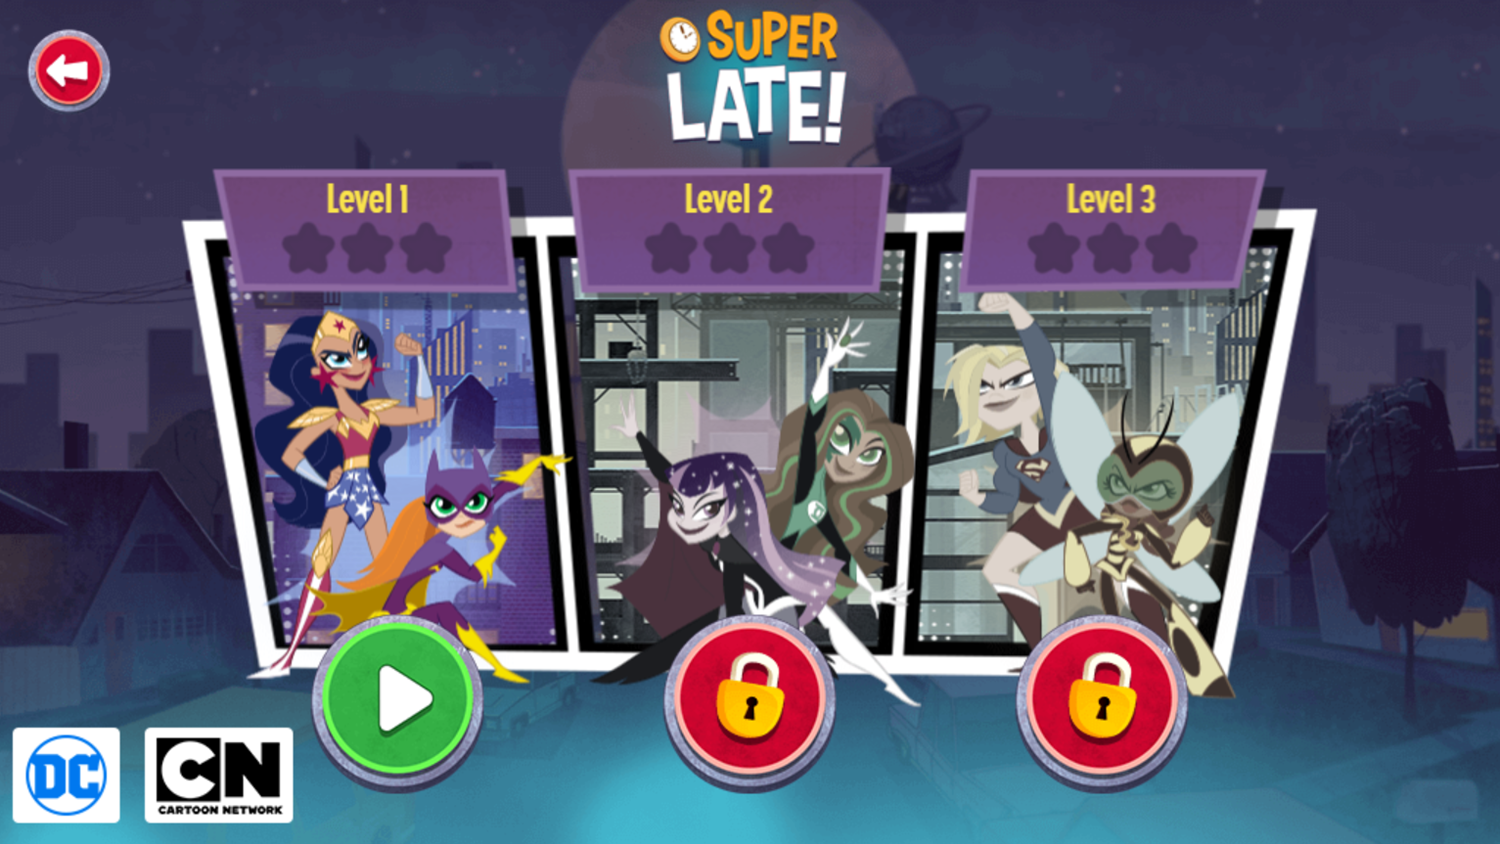 Super Hero Girls Super Late Game Level Select Screenshot.